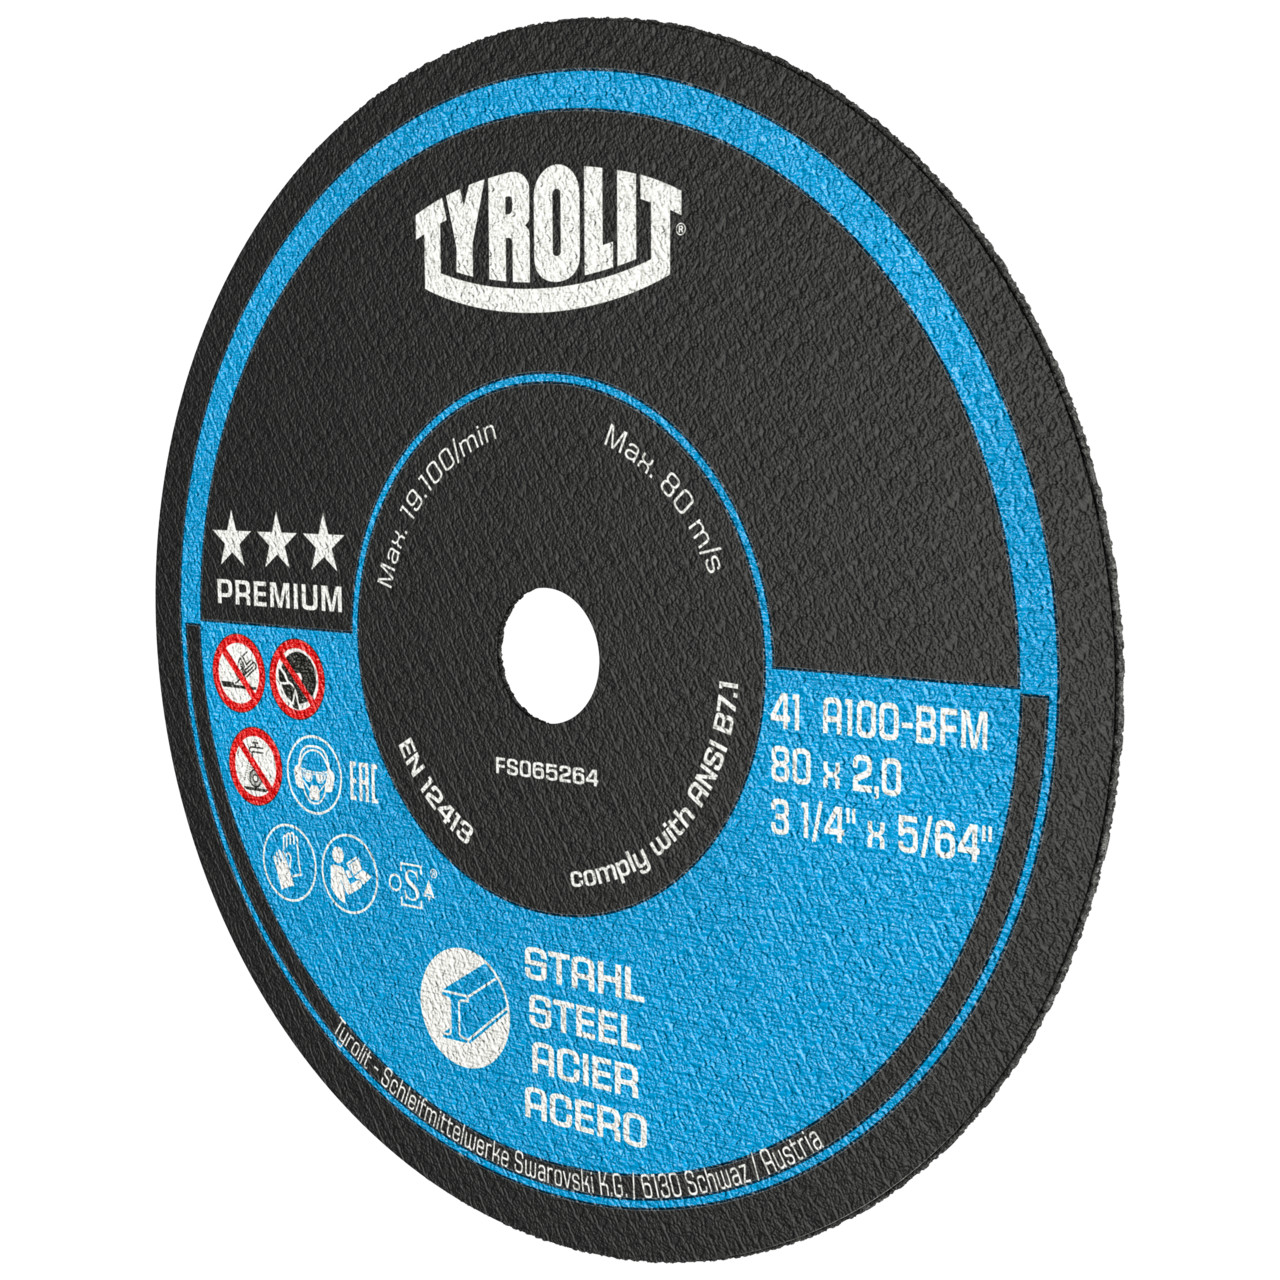 TYROLIT cut-off wheels DxDxH 75x1x10 For steel, shape: 41 - straight version, Art. 325212